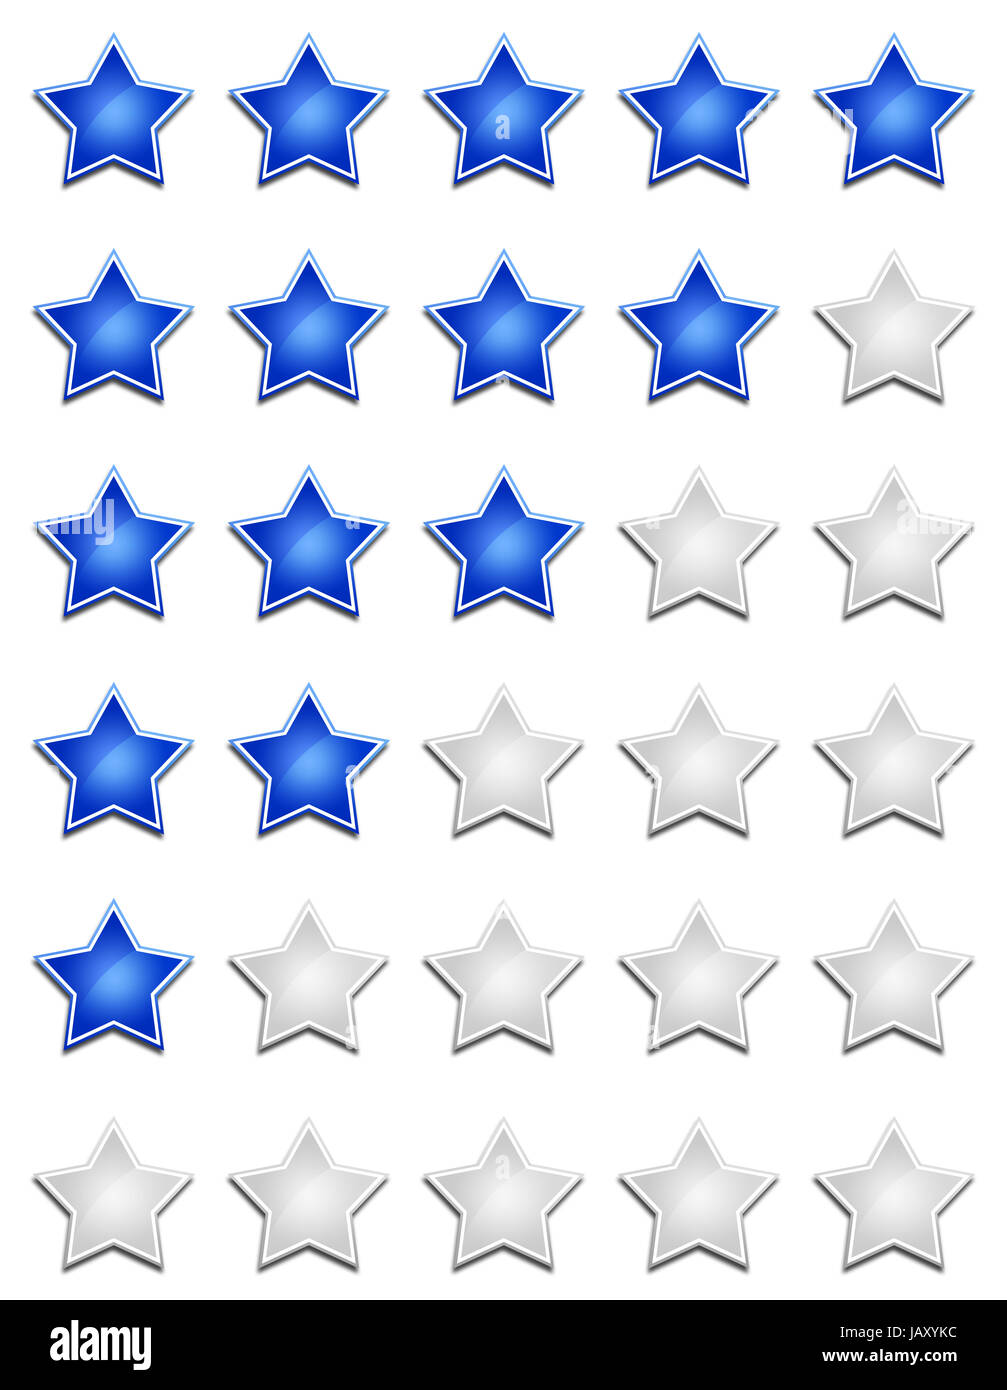 Fünf Sterne Bewertungssystem - Blau Weiß Foto Stock